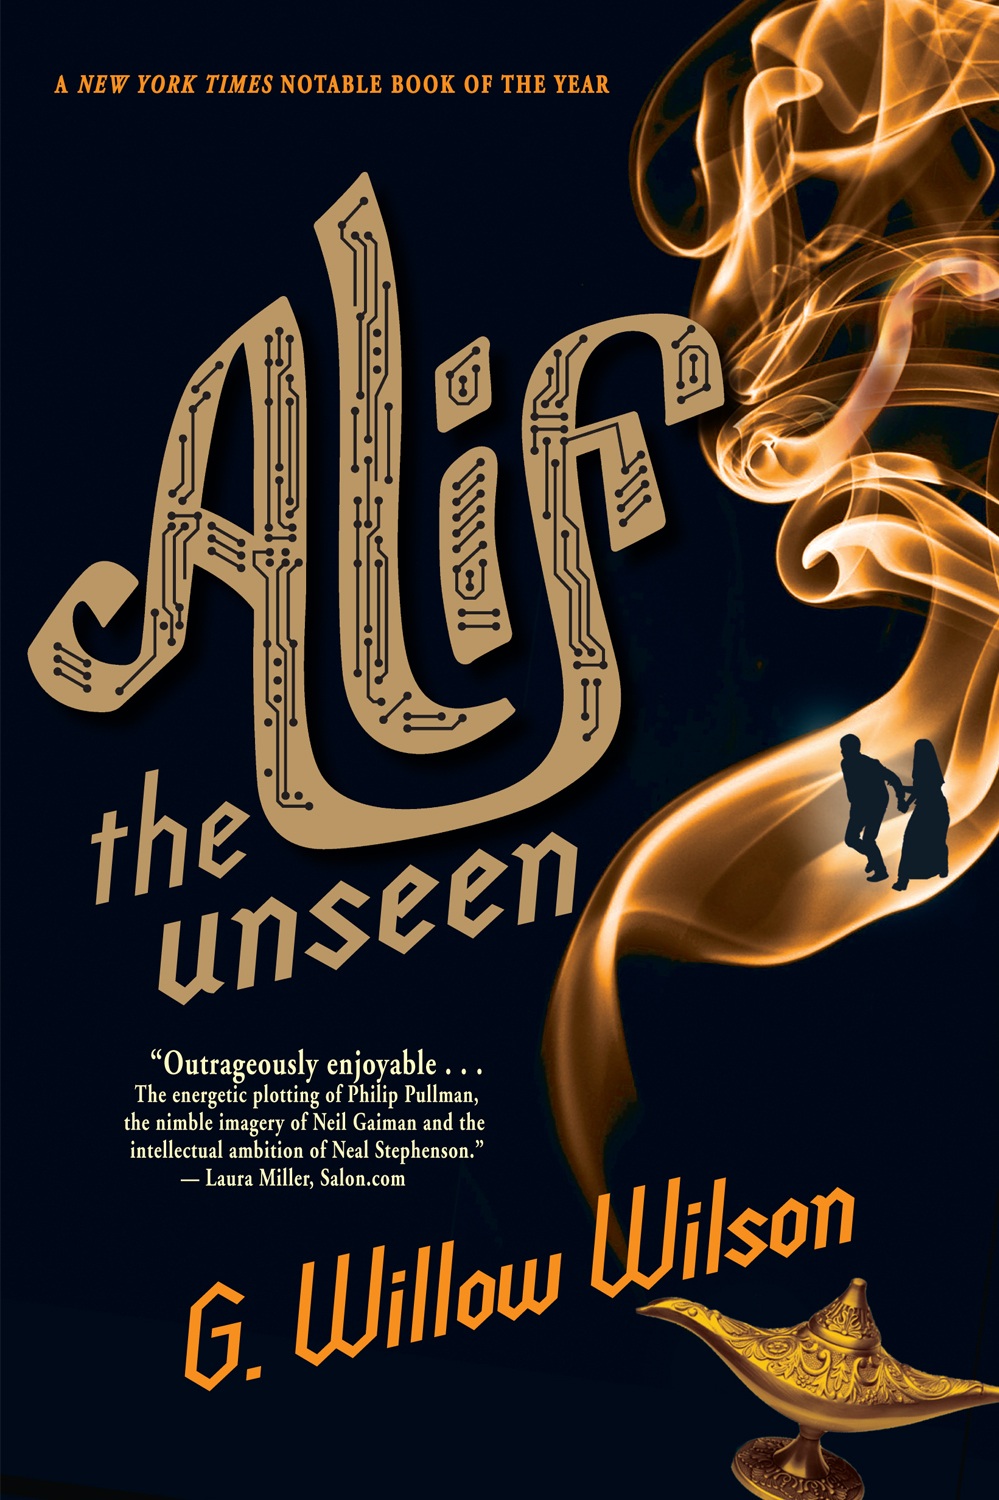 Alif the Unseen - G. Willow Wilson